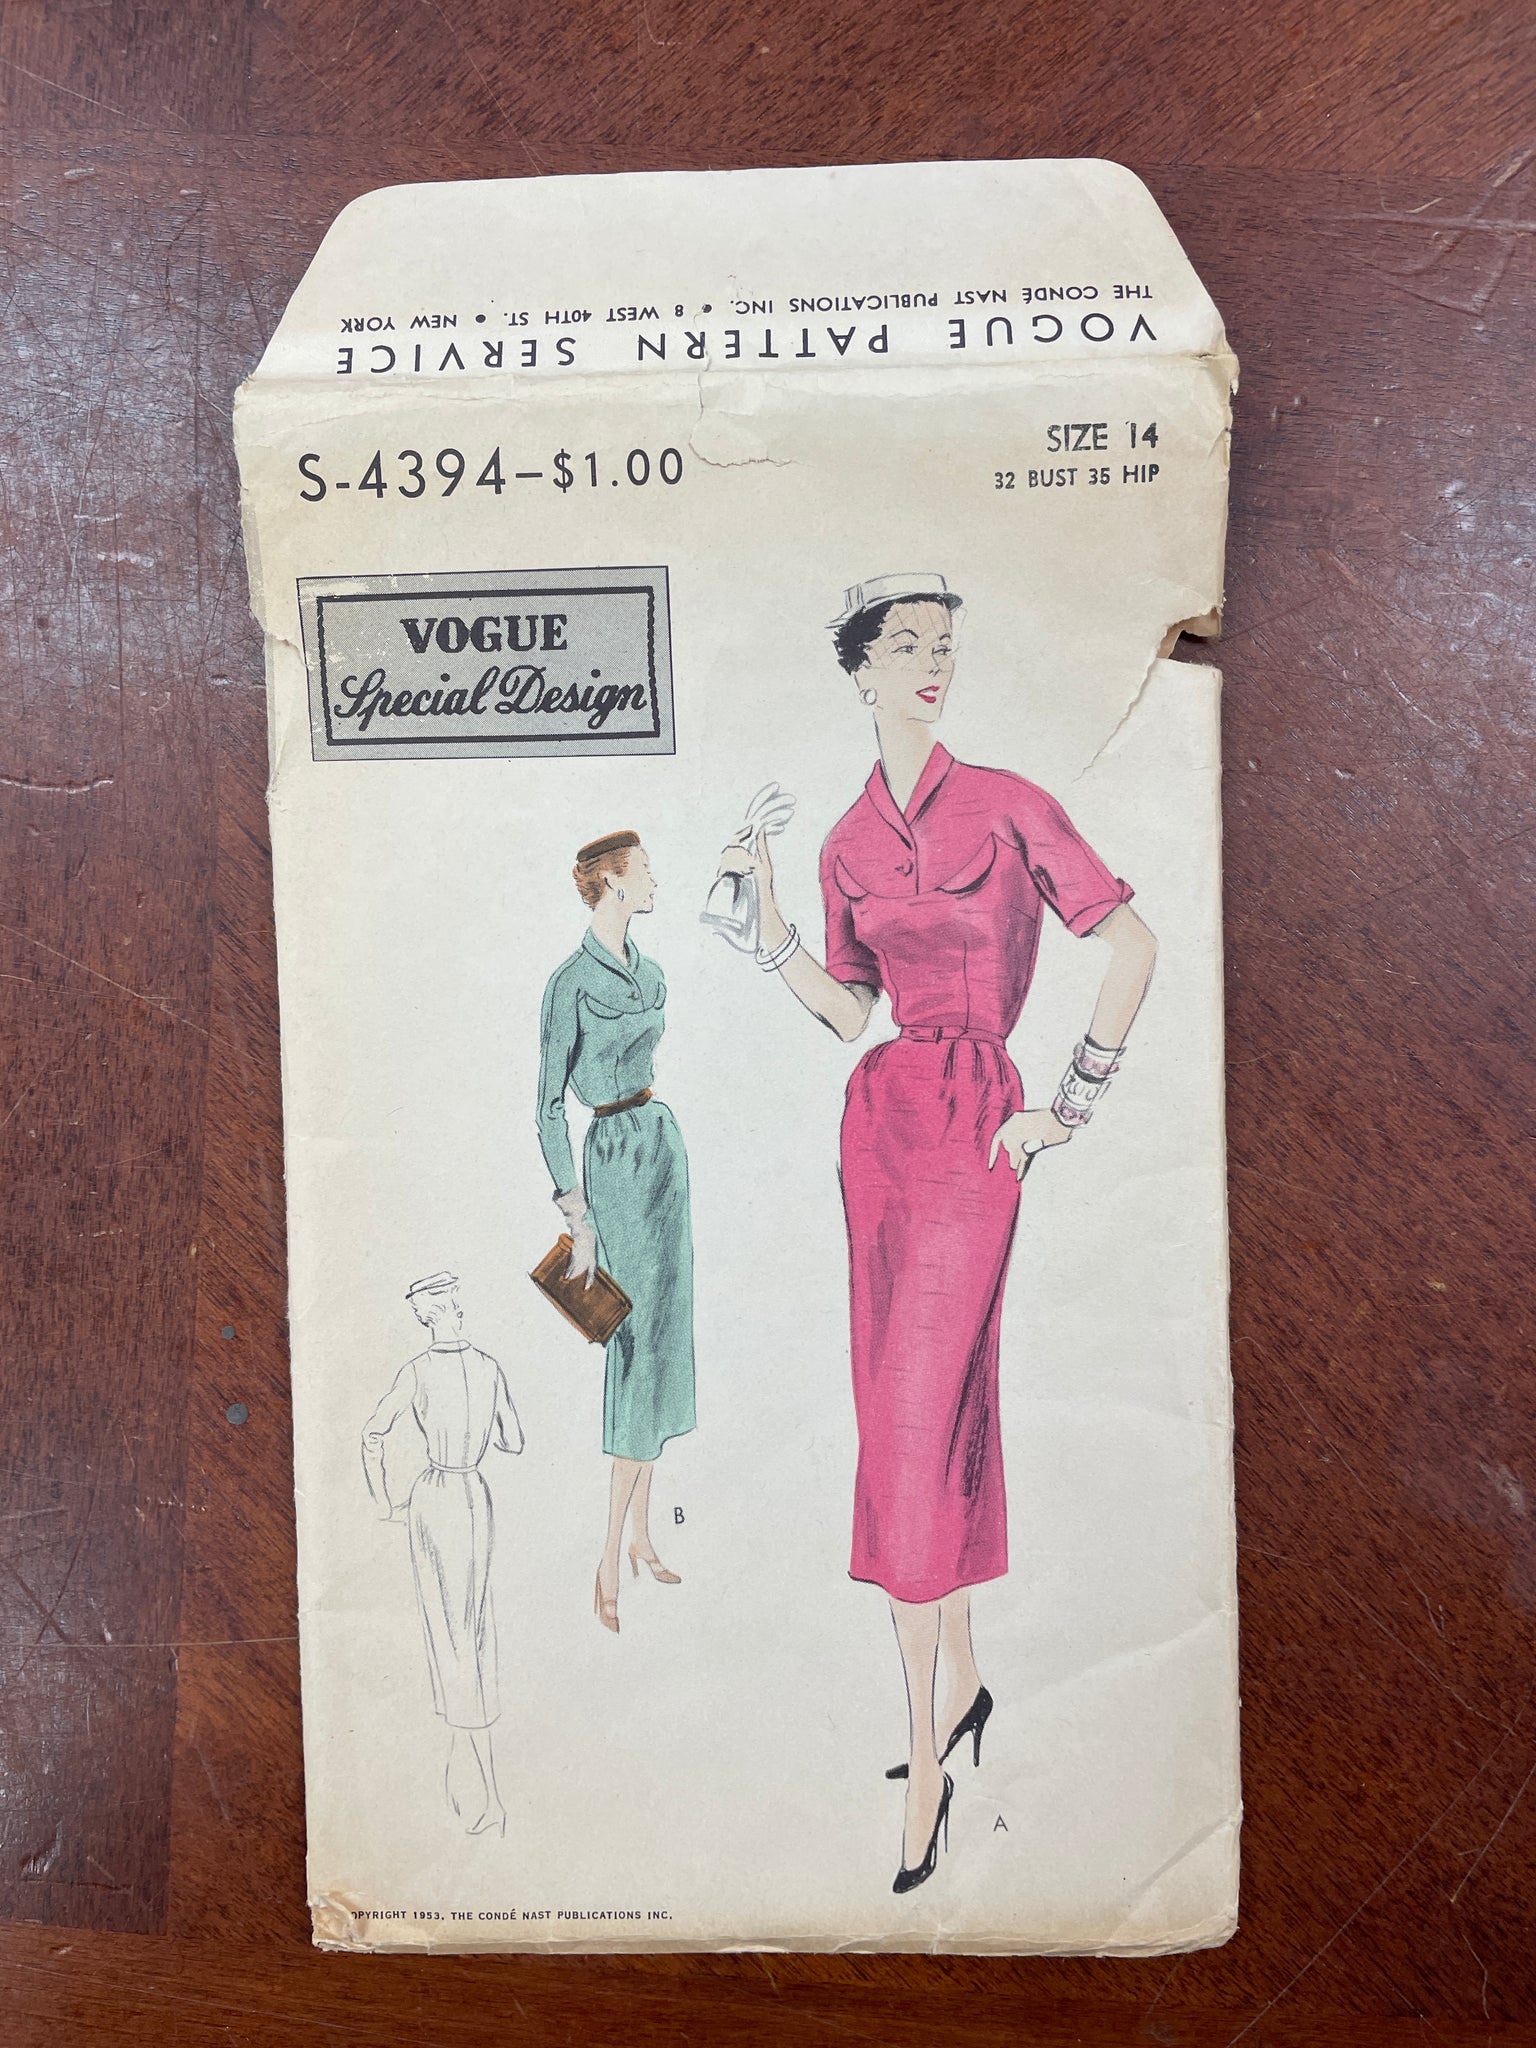 1953 Vogue 4394 Pattern - Dress WITH VOGUE LABEL